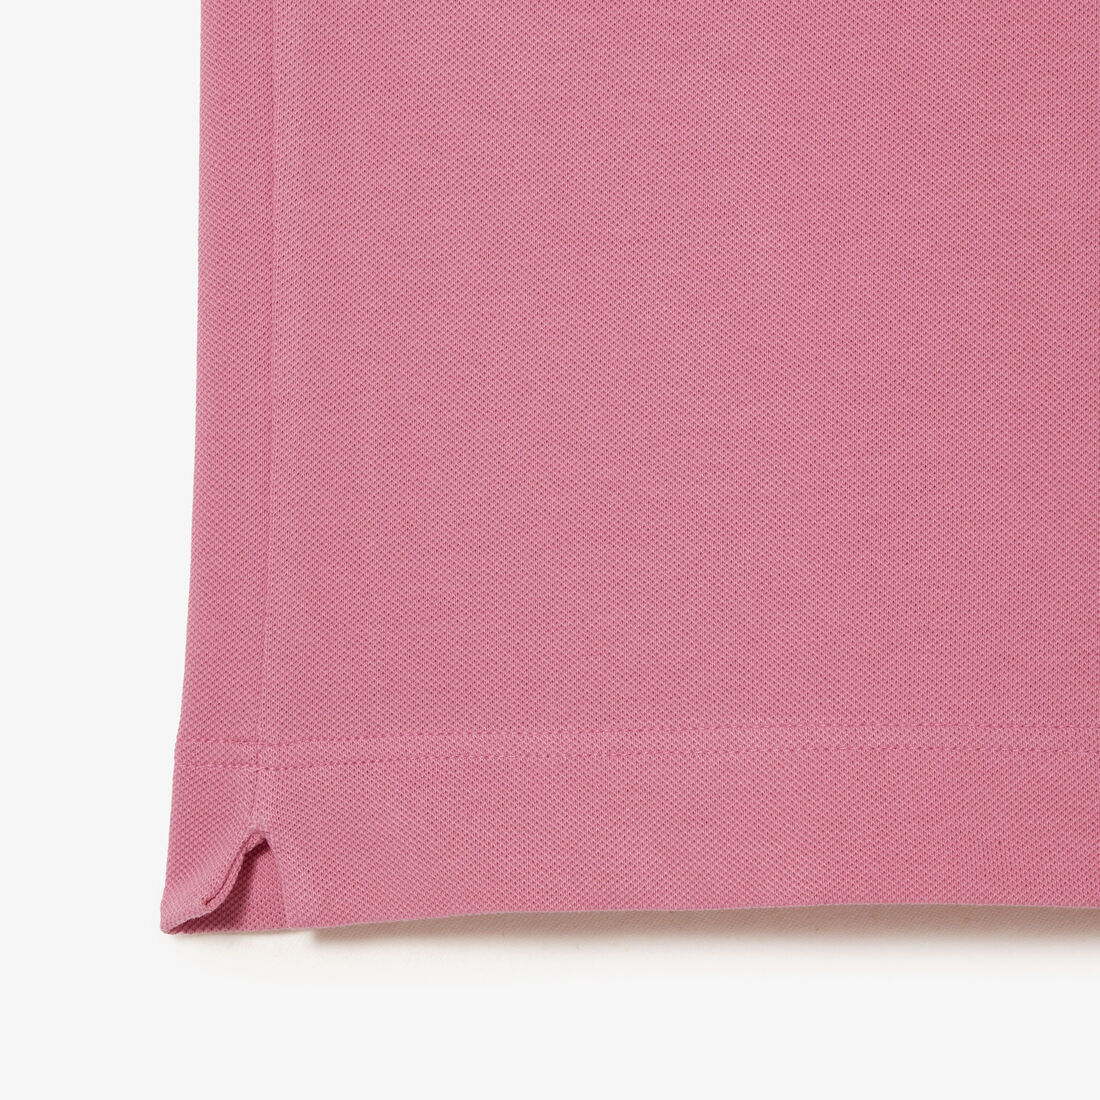 Lacoste Organic Baumwoll Piqué Polo Shirts Herren Rosa Rot | GUSZ-51842